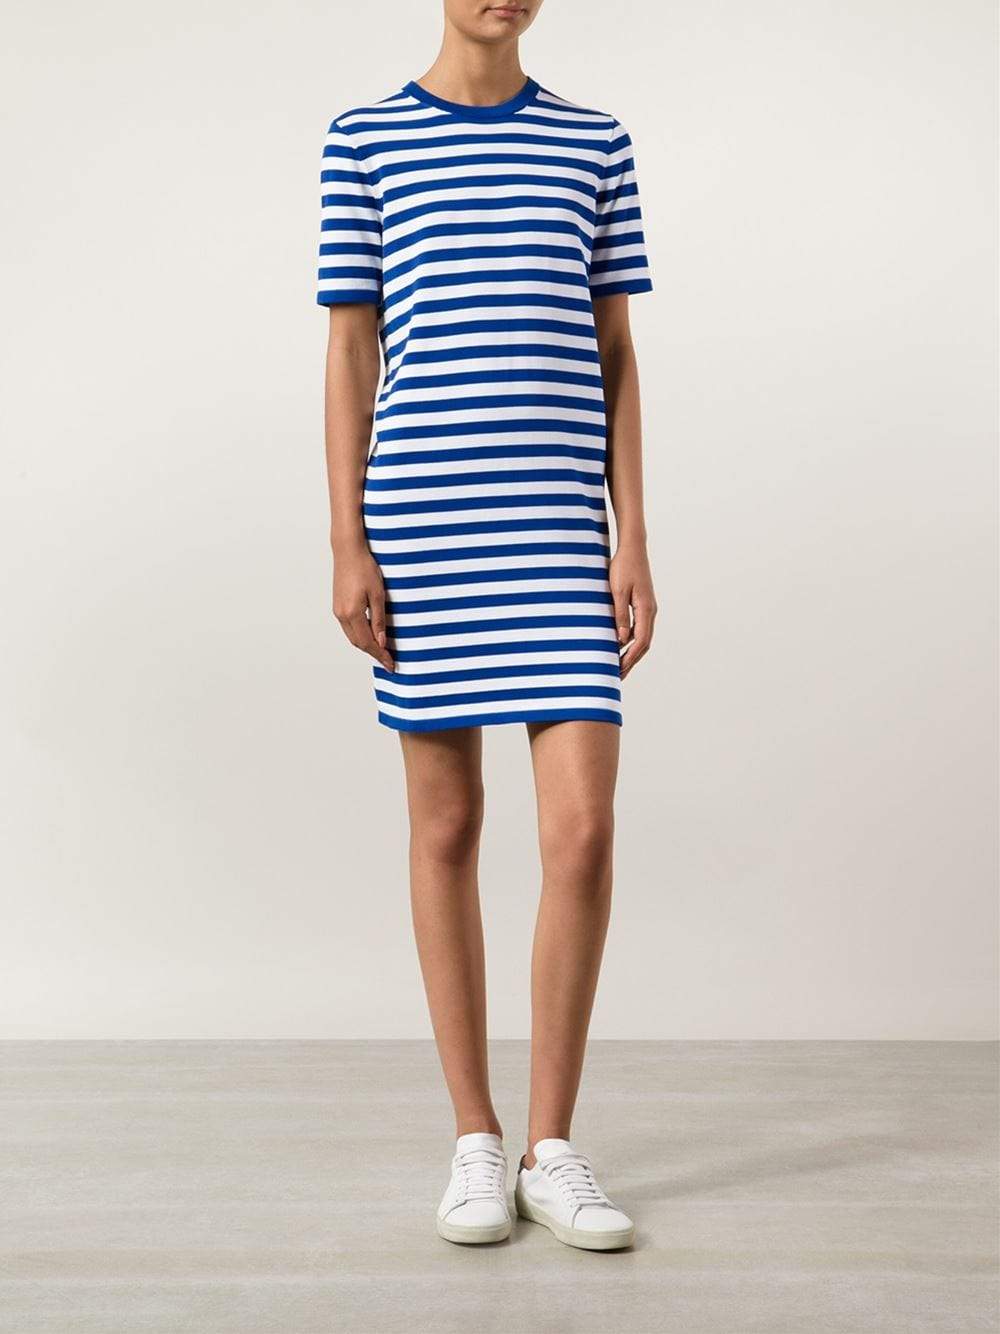 MICHAEL KORS-Striped Knit T-Shirt Dress-